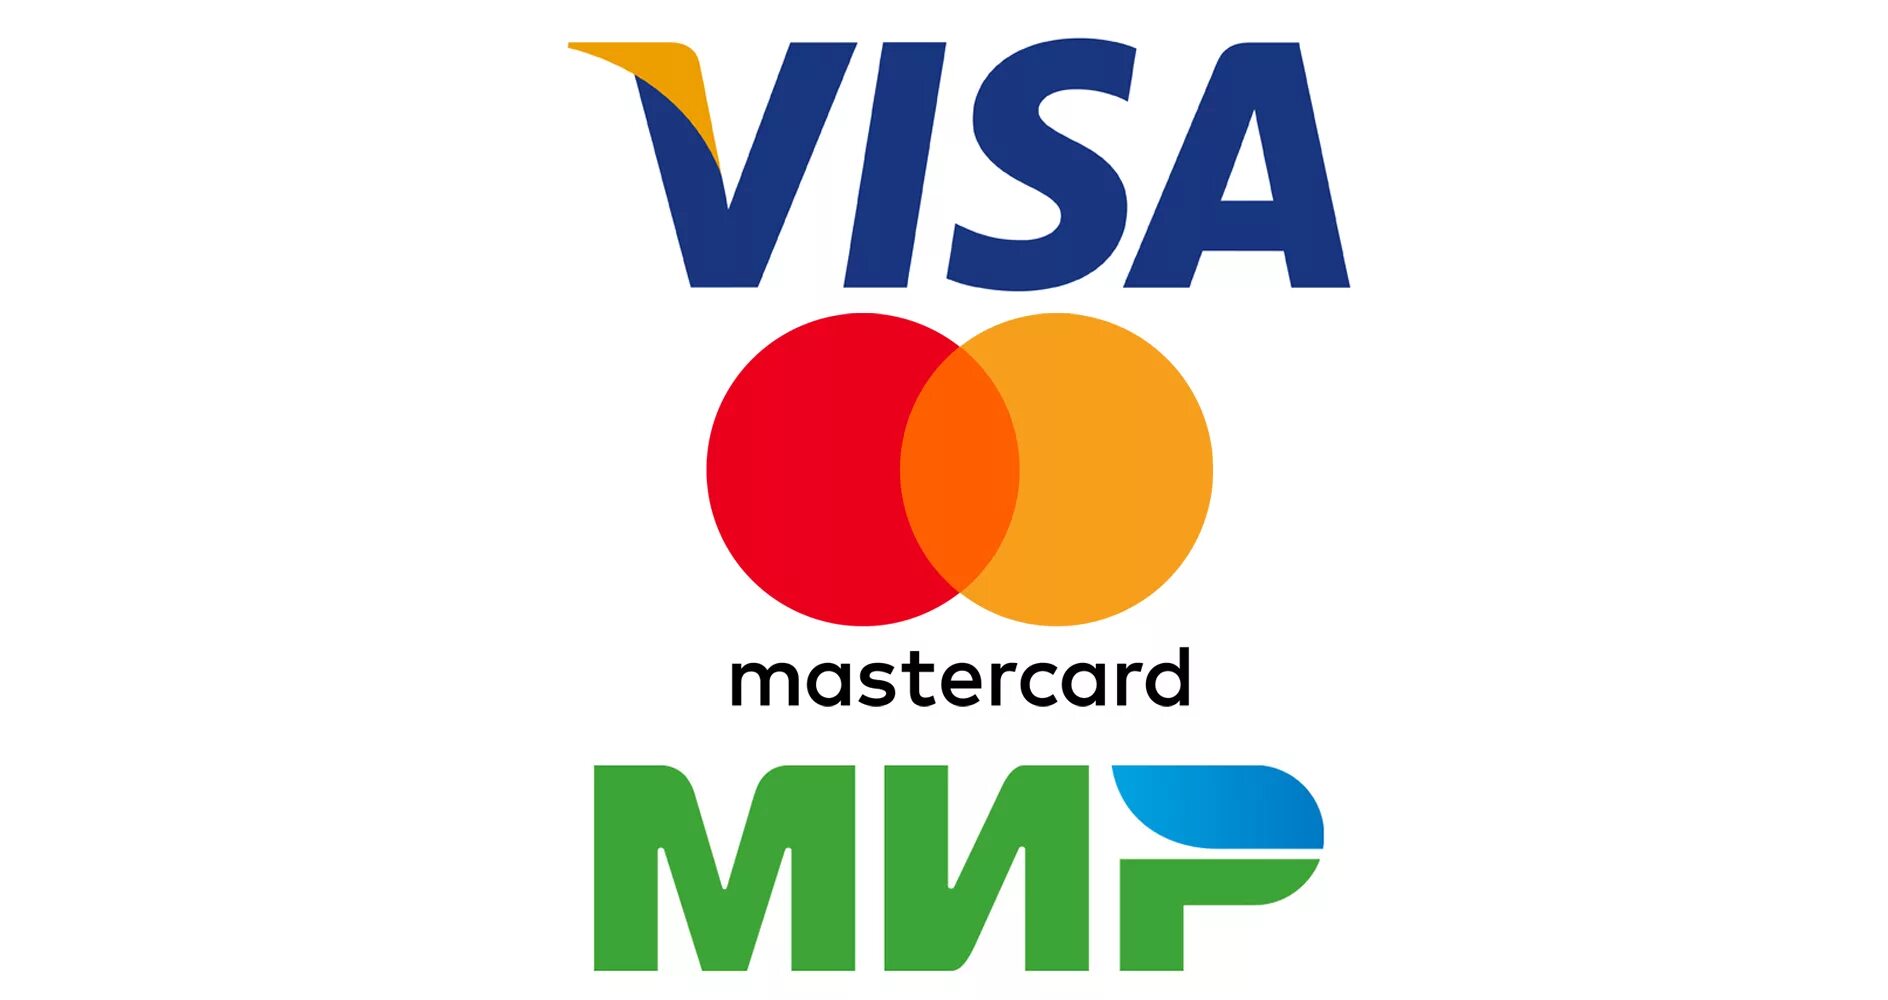 Visa mastercard платежные системы. Visa MASTERCARD мир. Логотип платежной системы visa. Оплата картой visa. Логотип visa MASTERCARD мир.